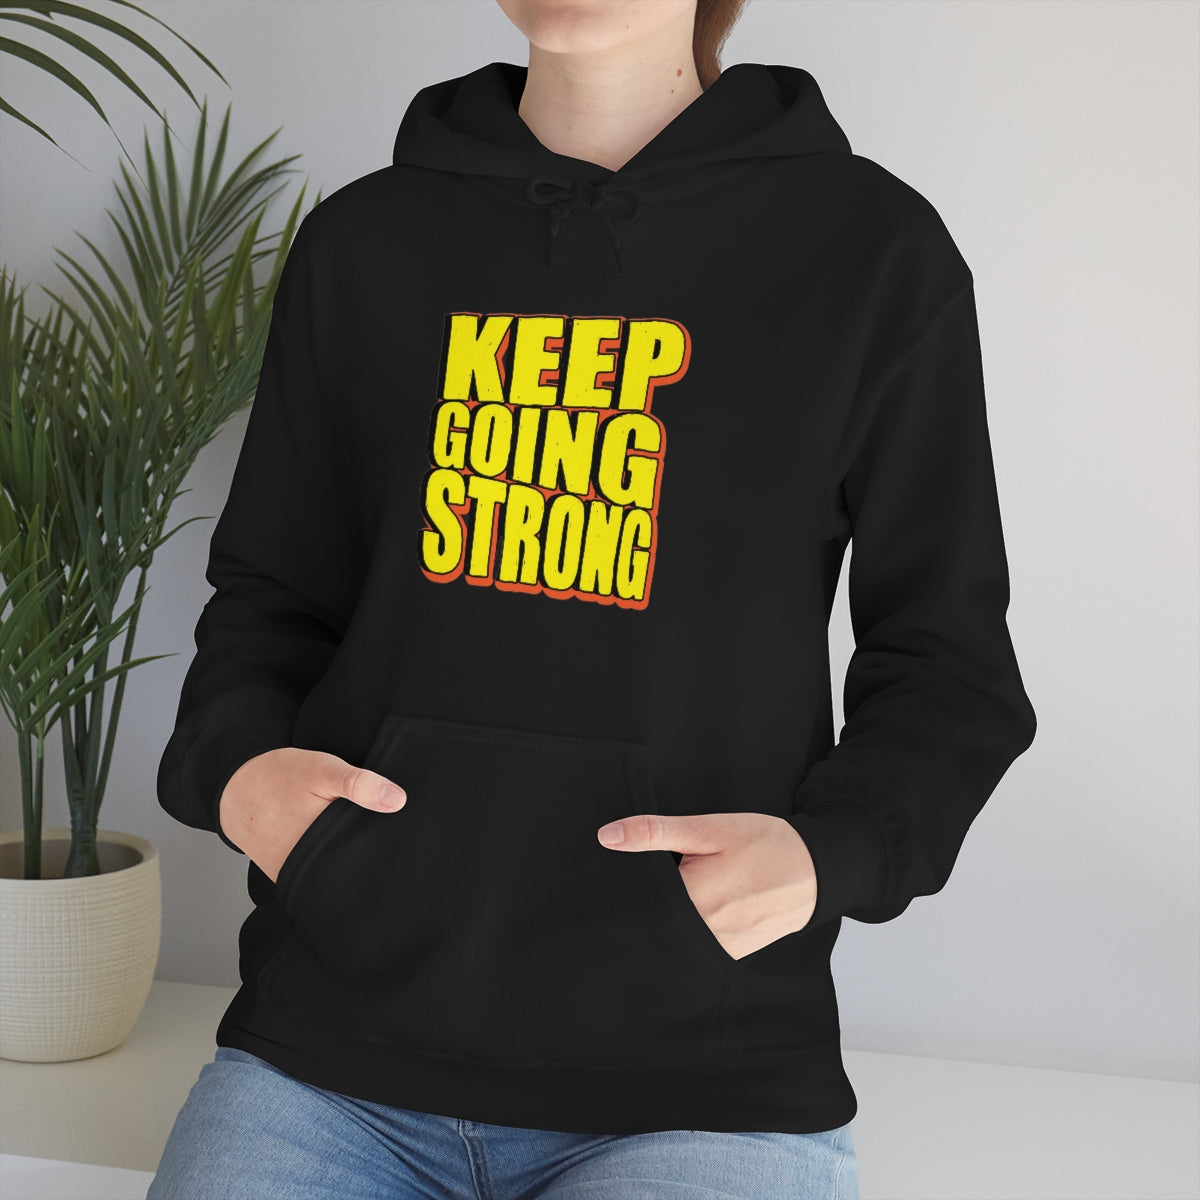 Keep Going Strong Hooded Sweatshirt